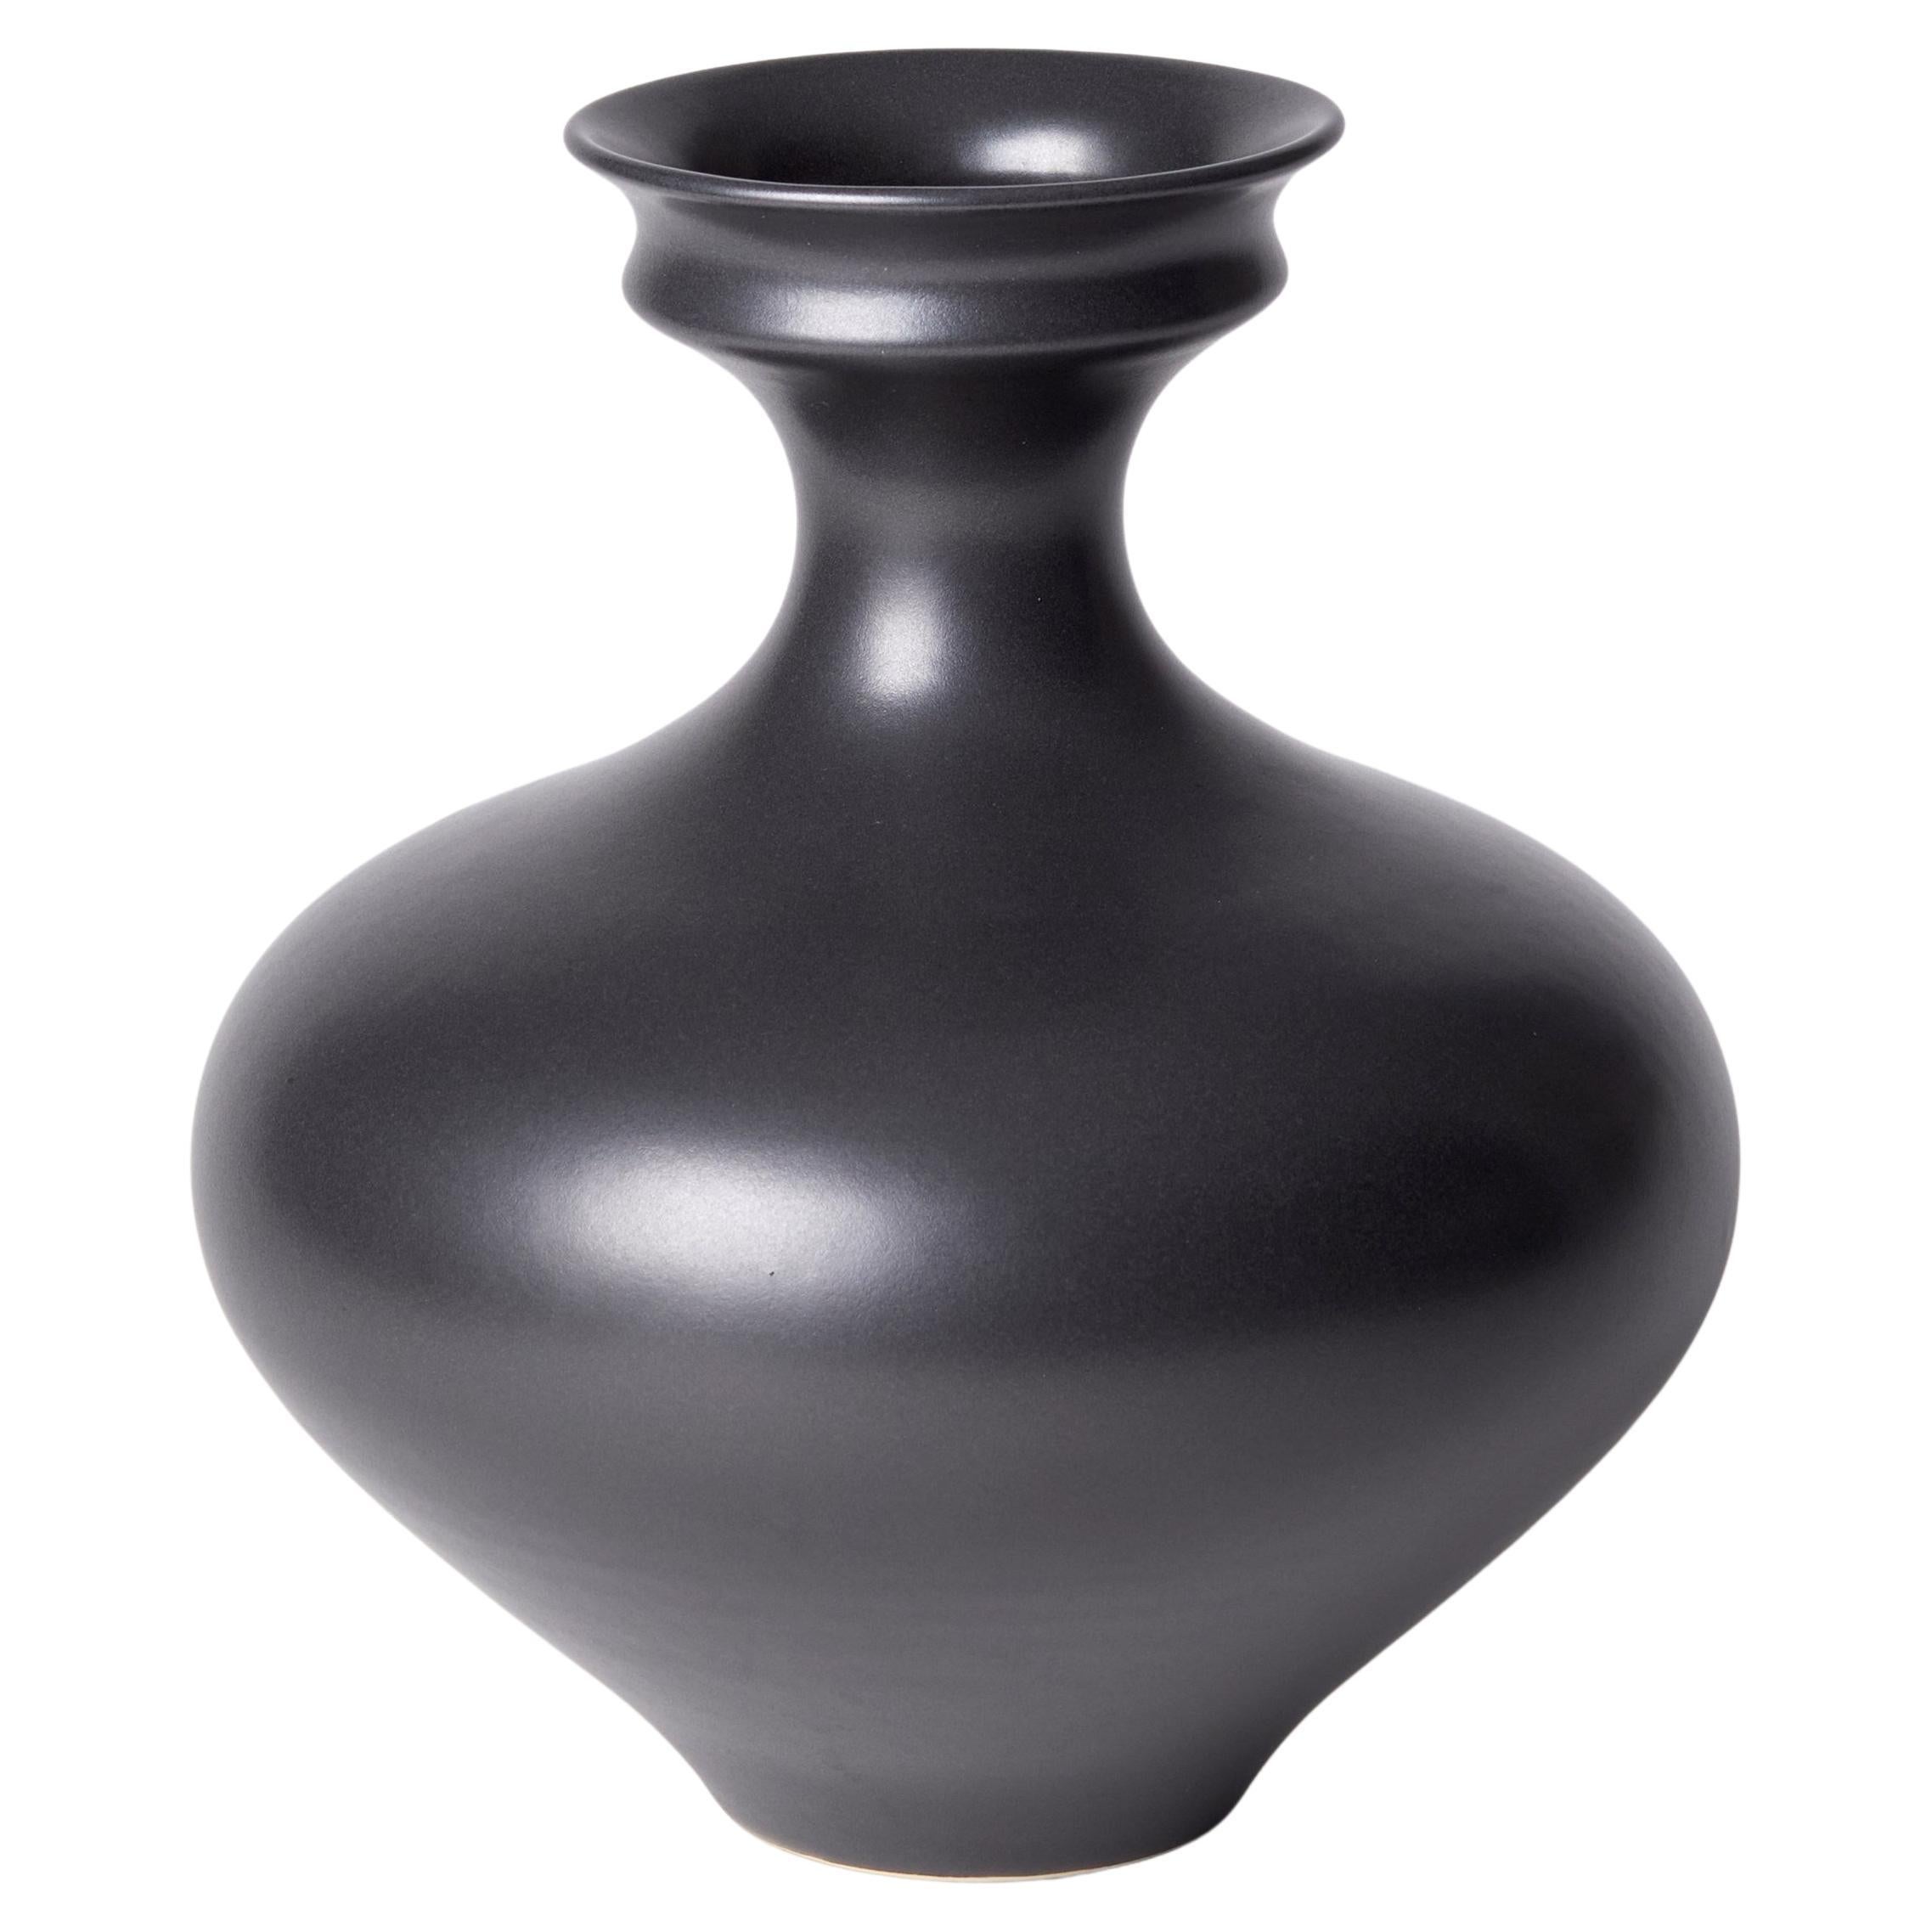 Dish Mouth Vase I, Unique Black / Ebony Porcelain Vase by Vivienne Foley